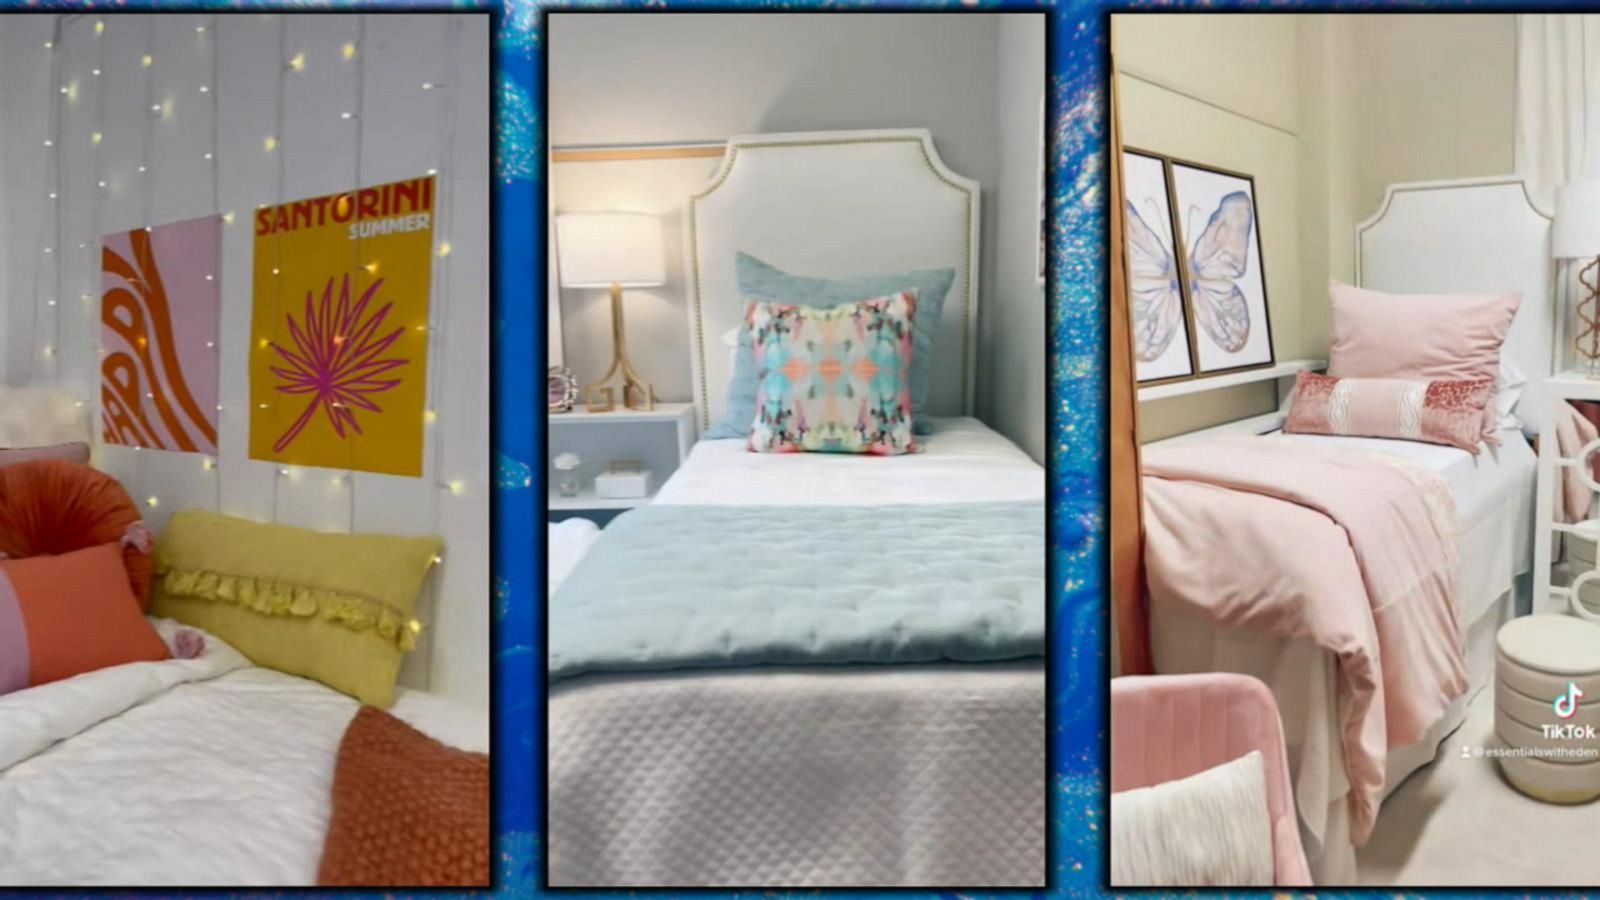 LV Themed Bedroom Decor! [Video]